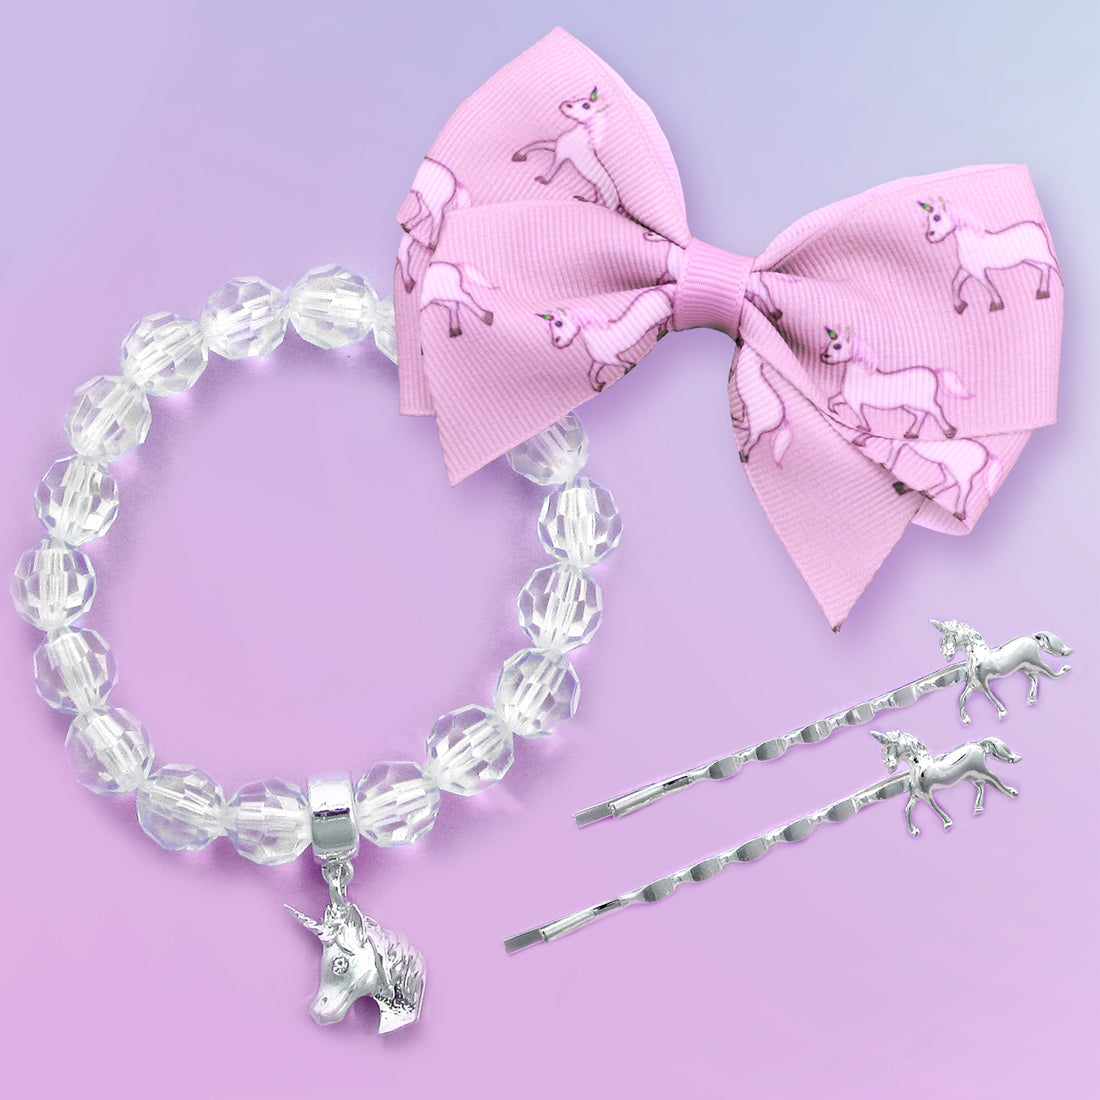 emoji® Unicorn Hair Clips and Bracelet Set